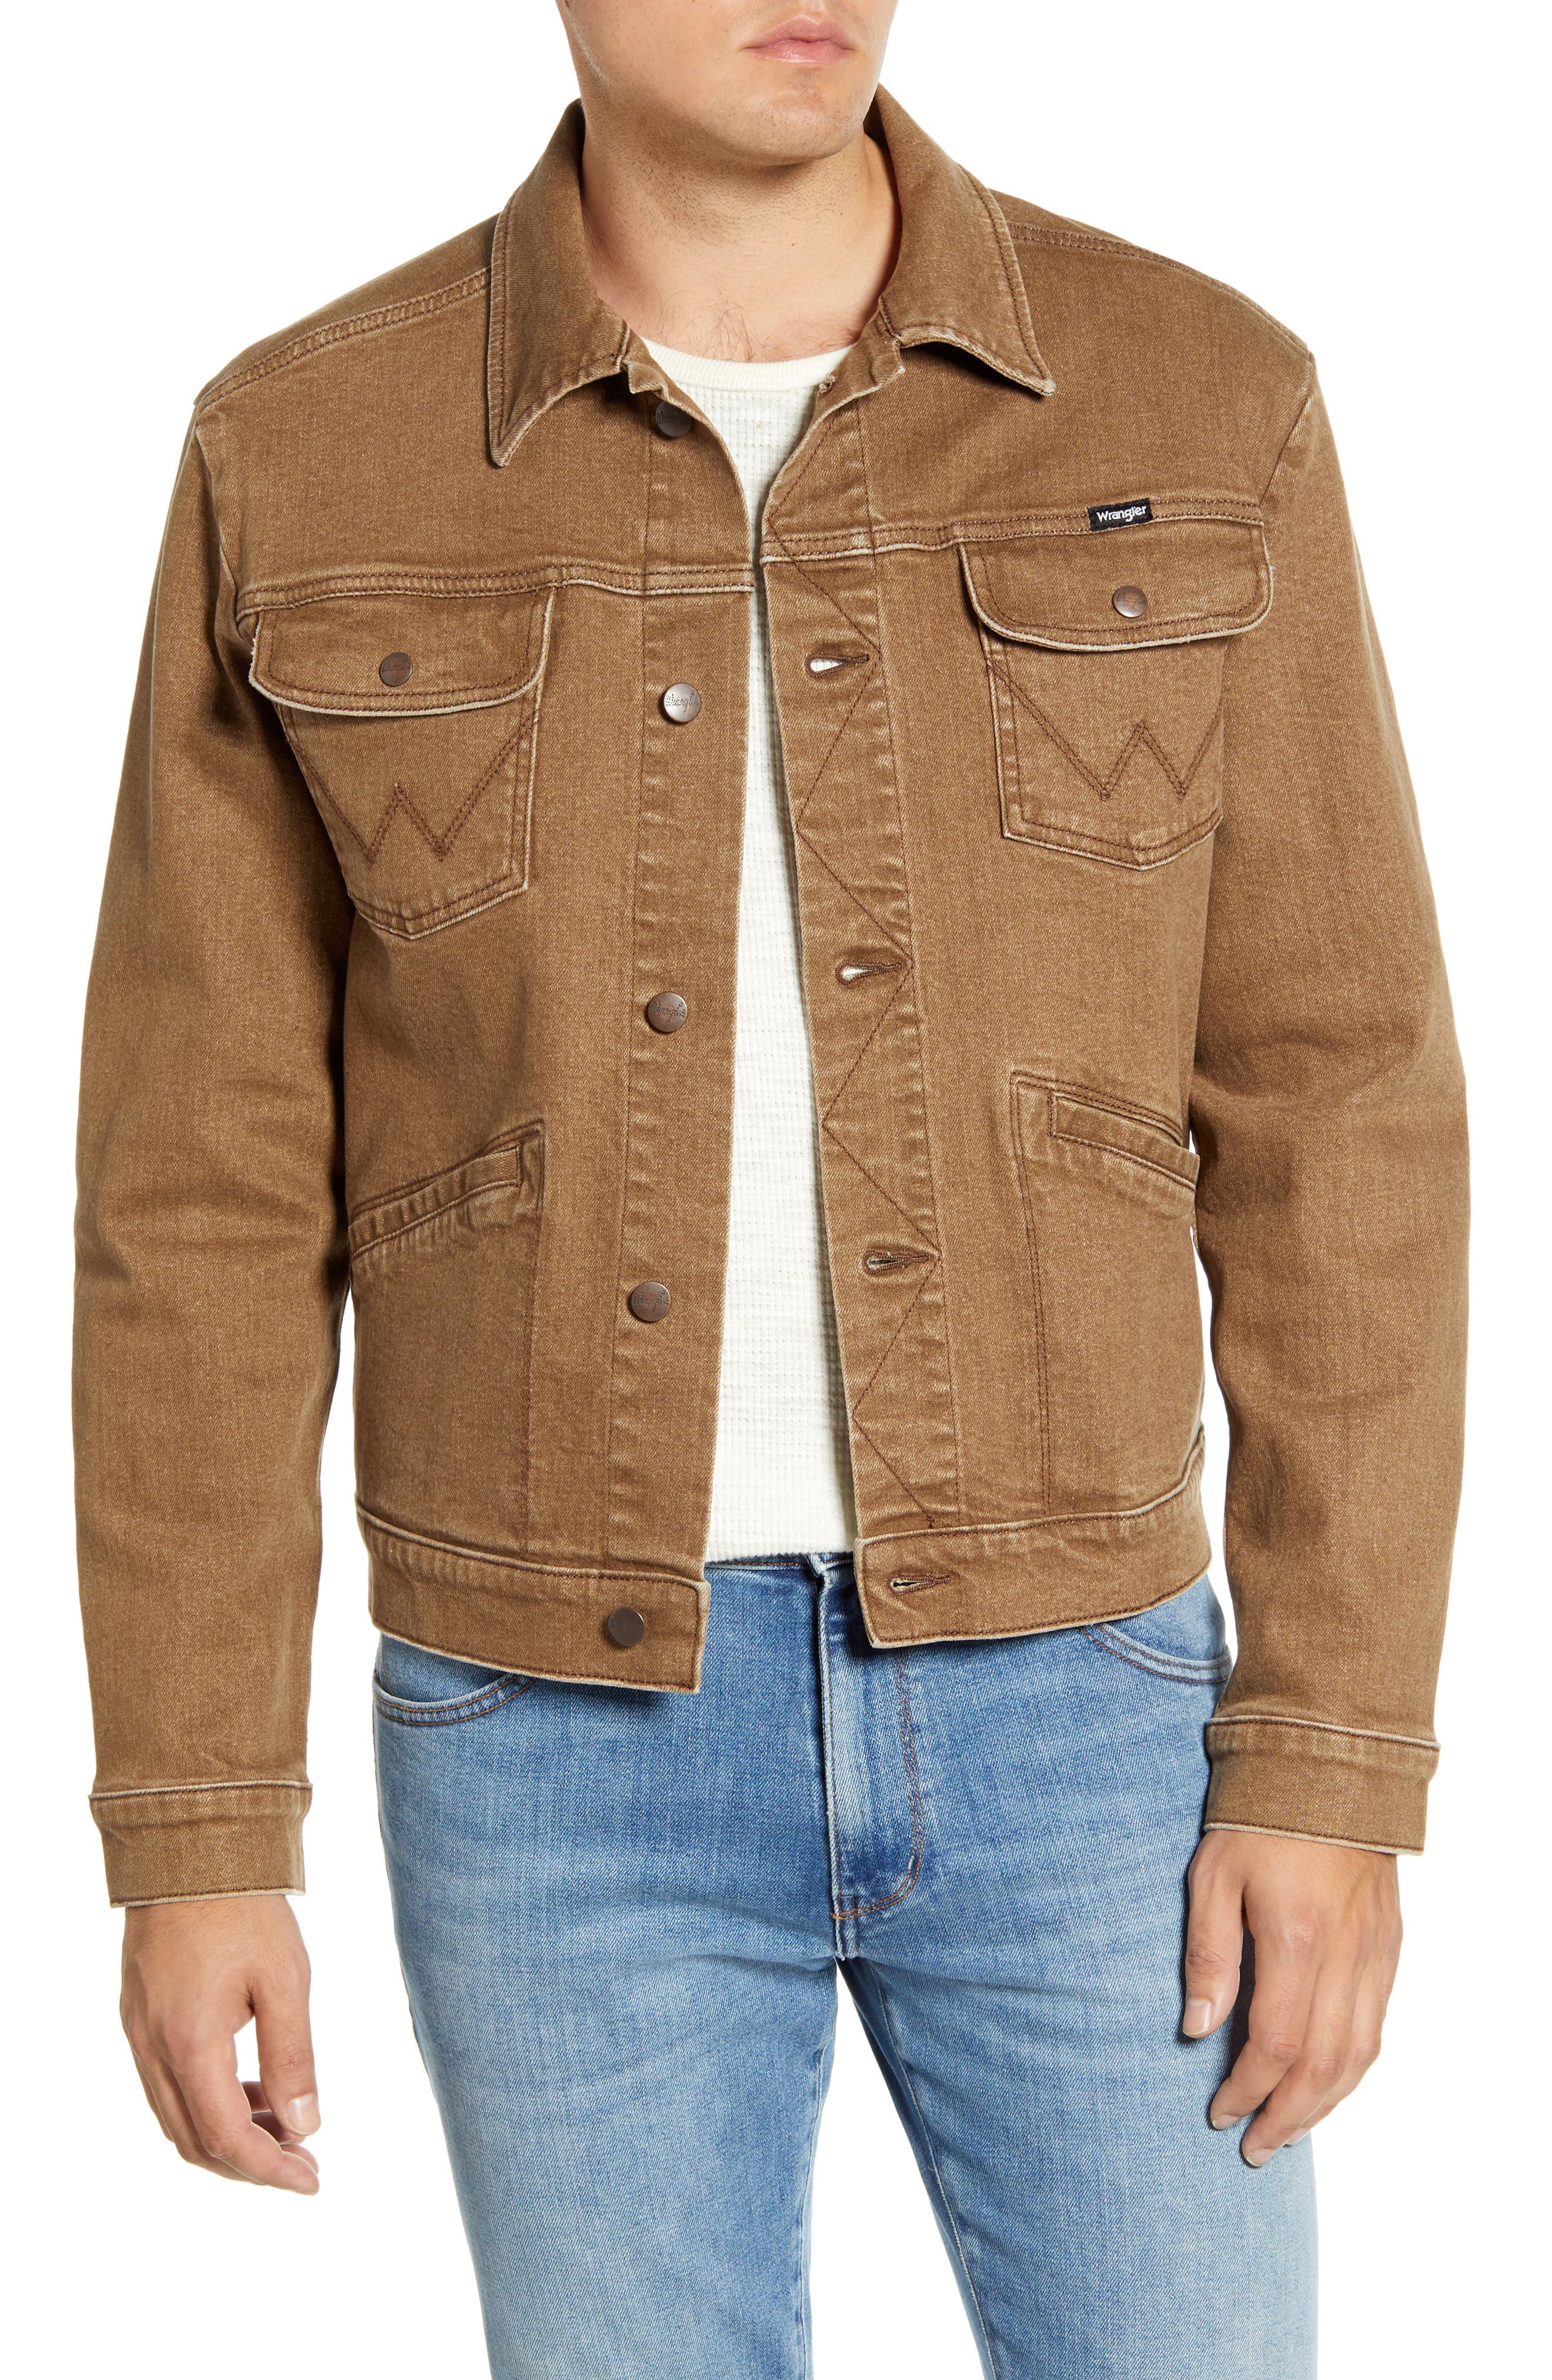 wrangler heritage jacket